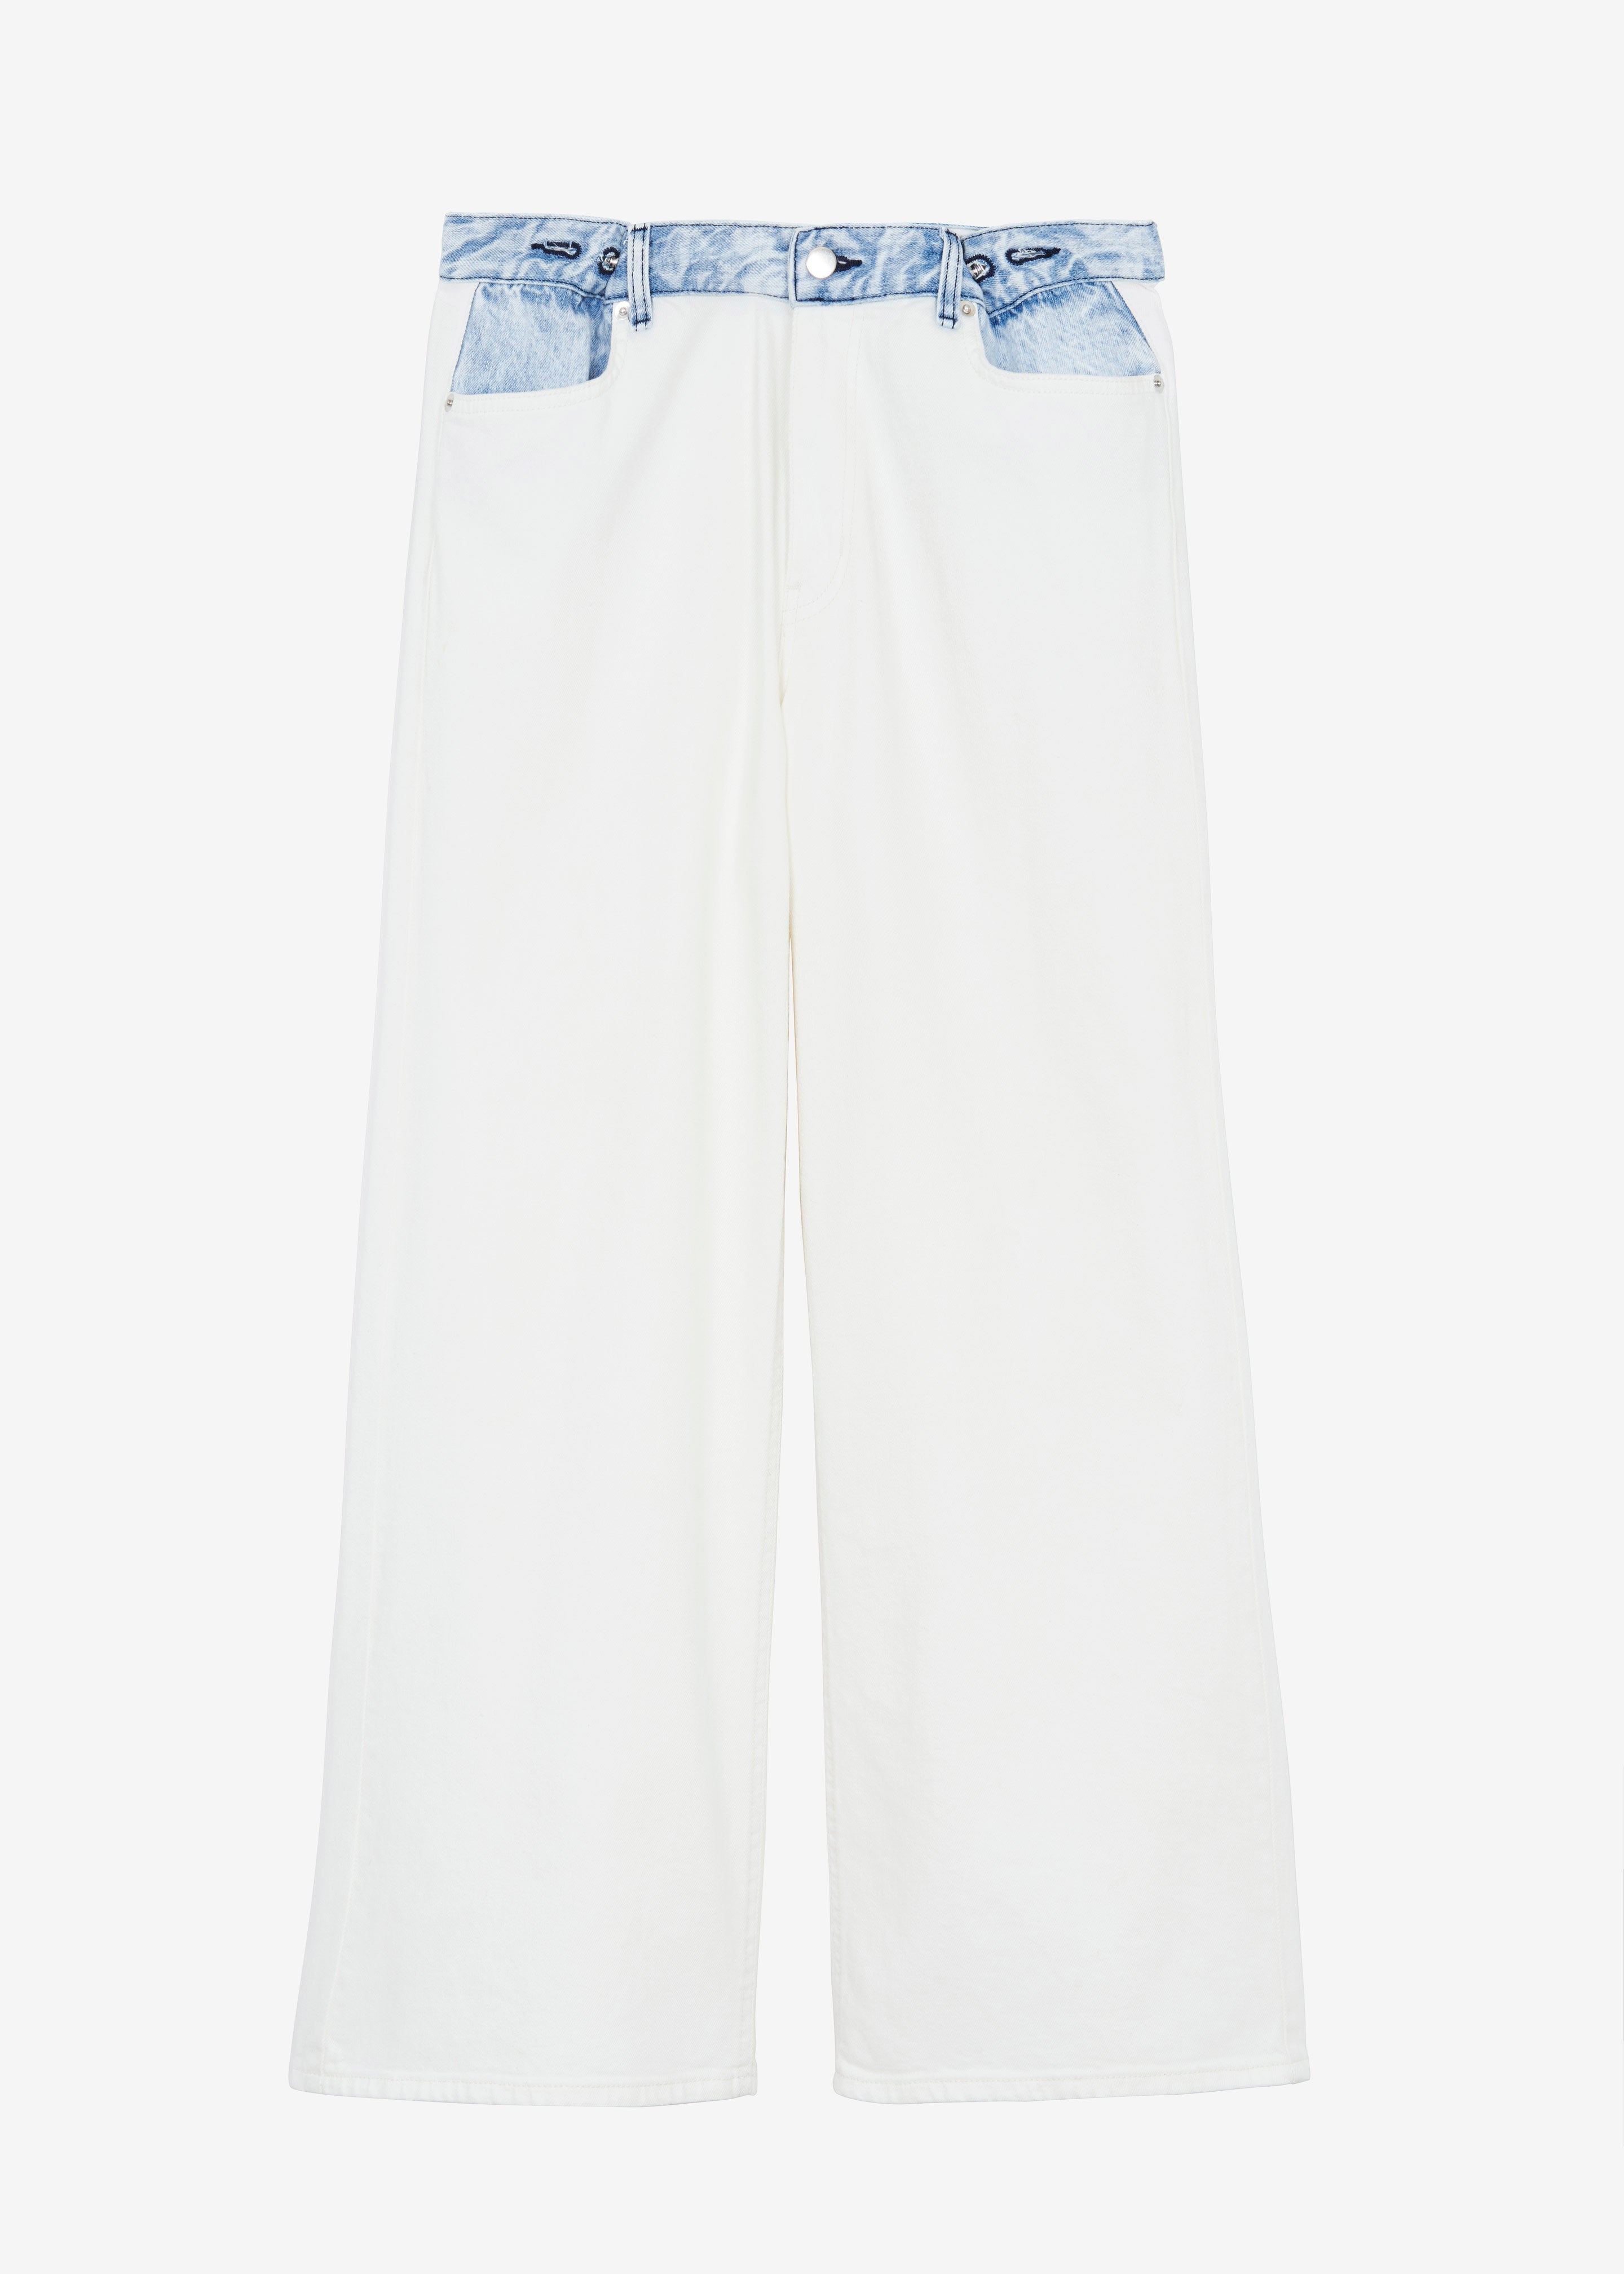 Hayla Contrast Denim Pants - Off White/Blue - 11